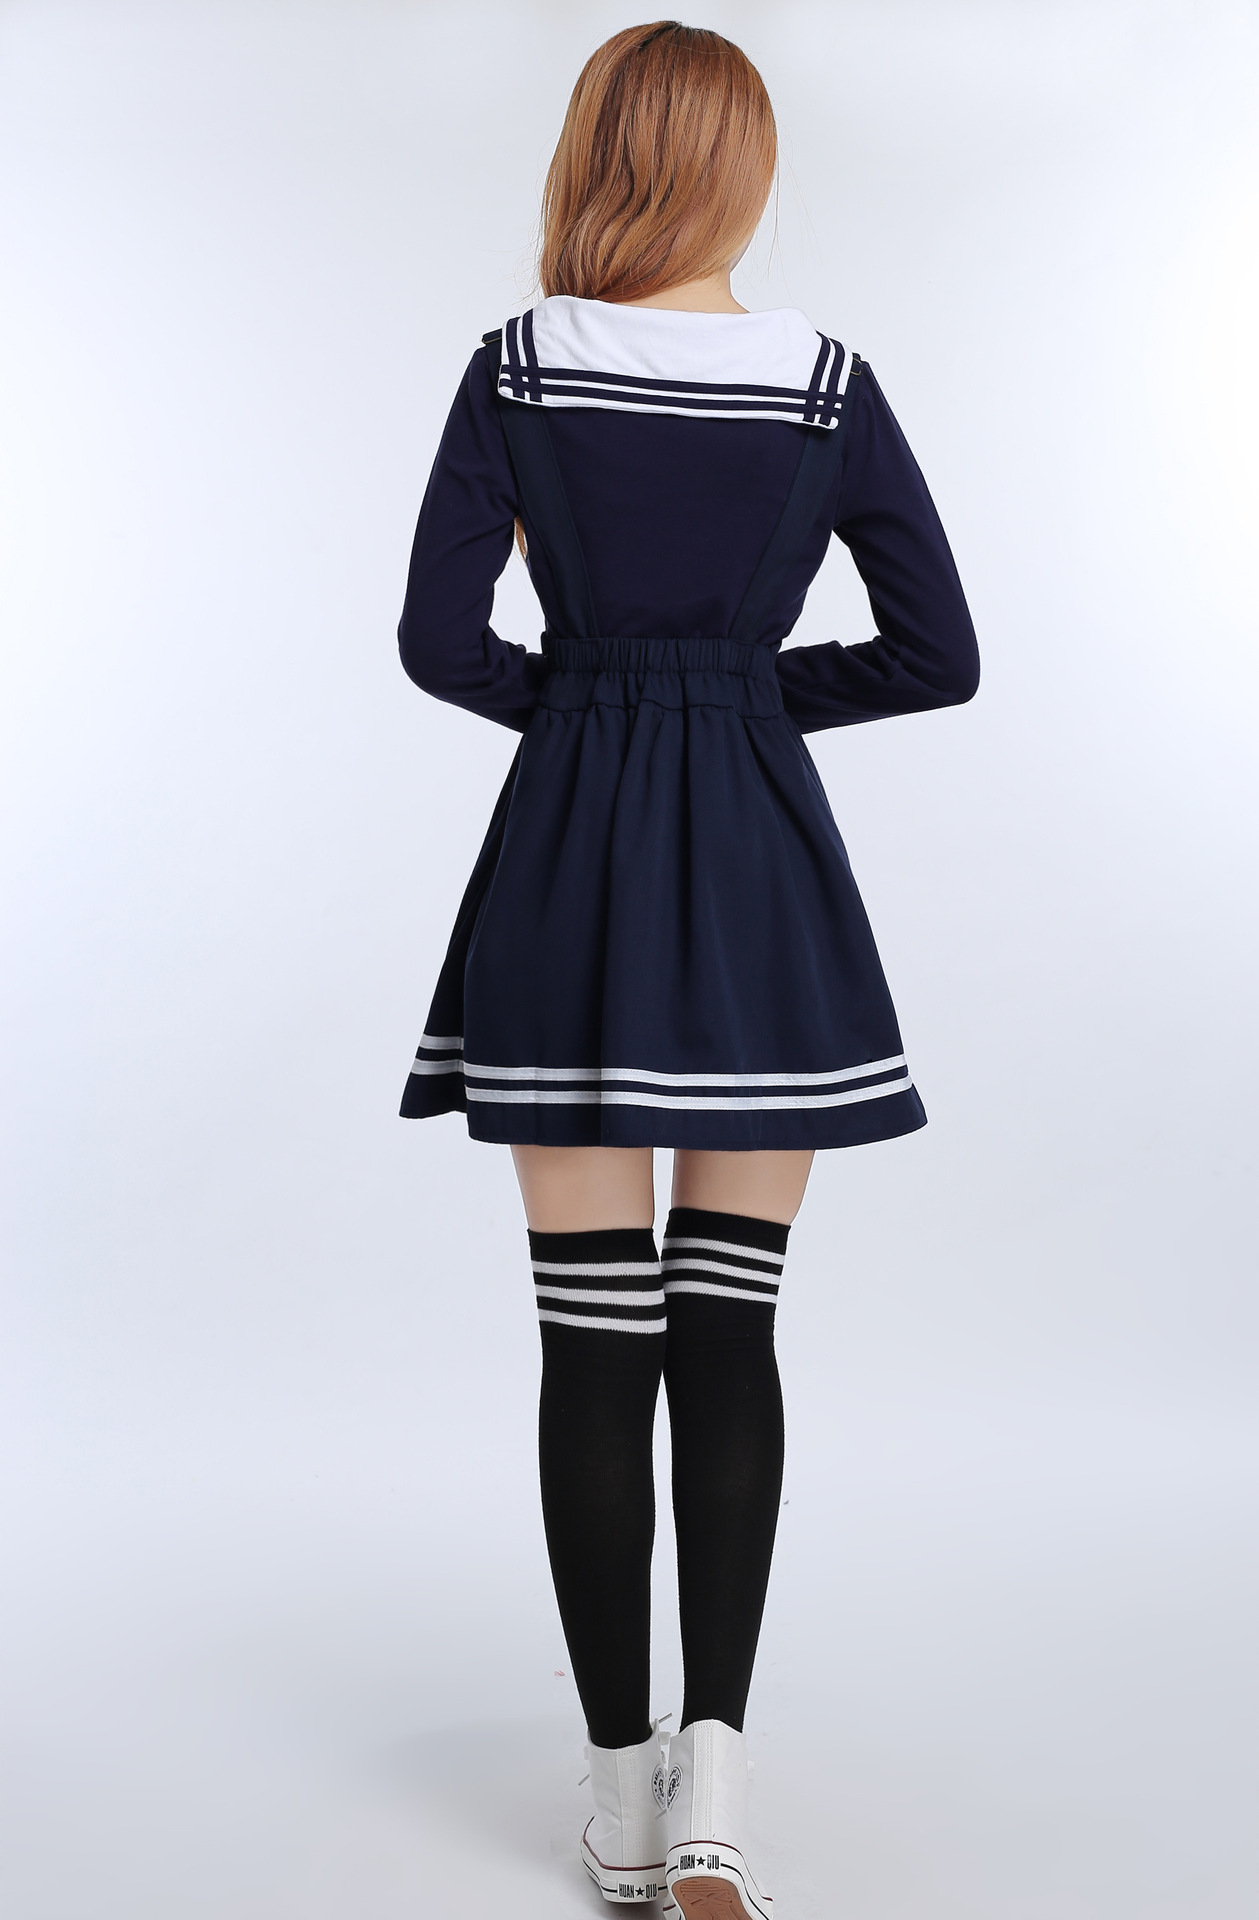 Japanese School Uniforms for Women Korean Navy Sailor Cotton School Uniforms For Girls Straps Skirt+Long Sleeve Shirt+Tie